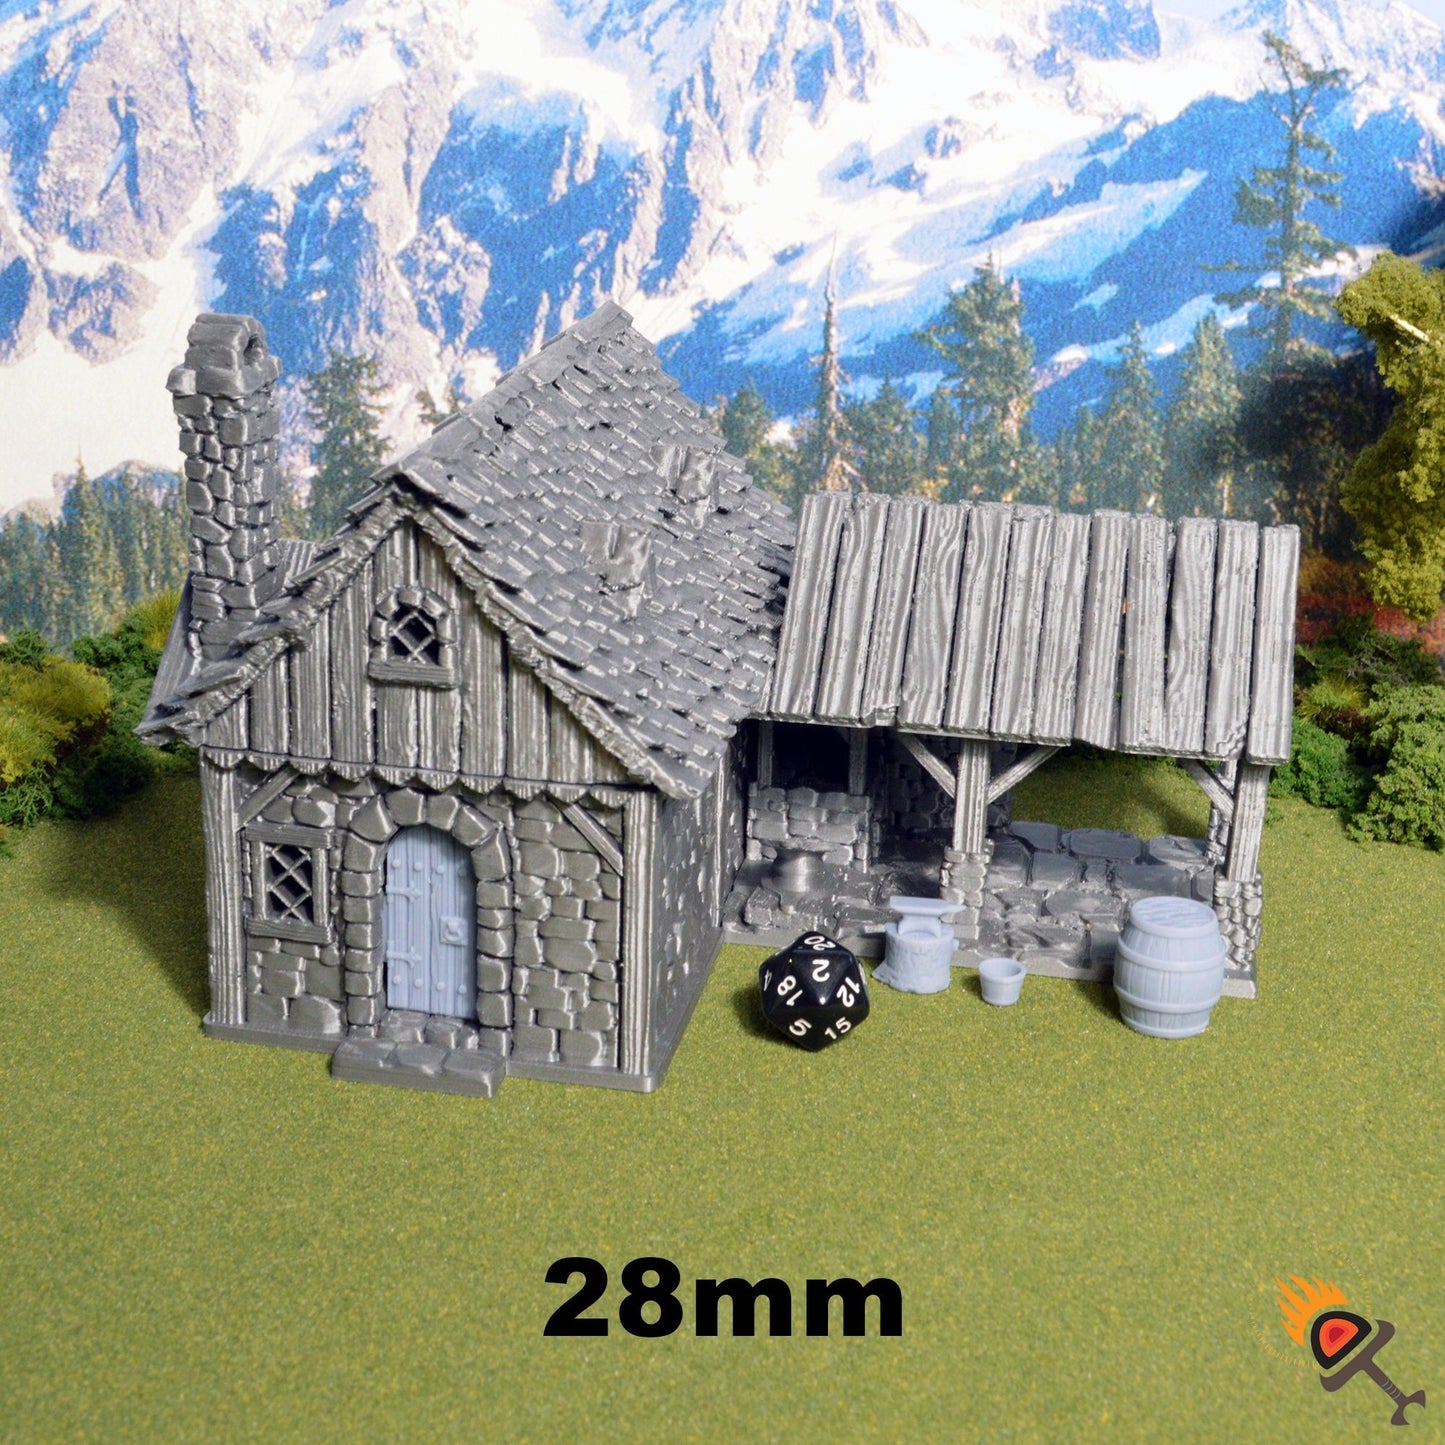 Blacksmith 28mm for D&D Terrain, DnD Pathfinder Diorama Village Workshop Anvil